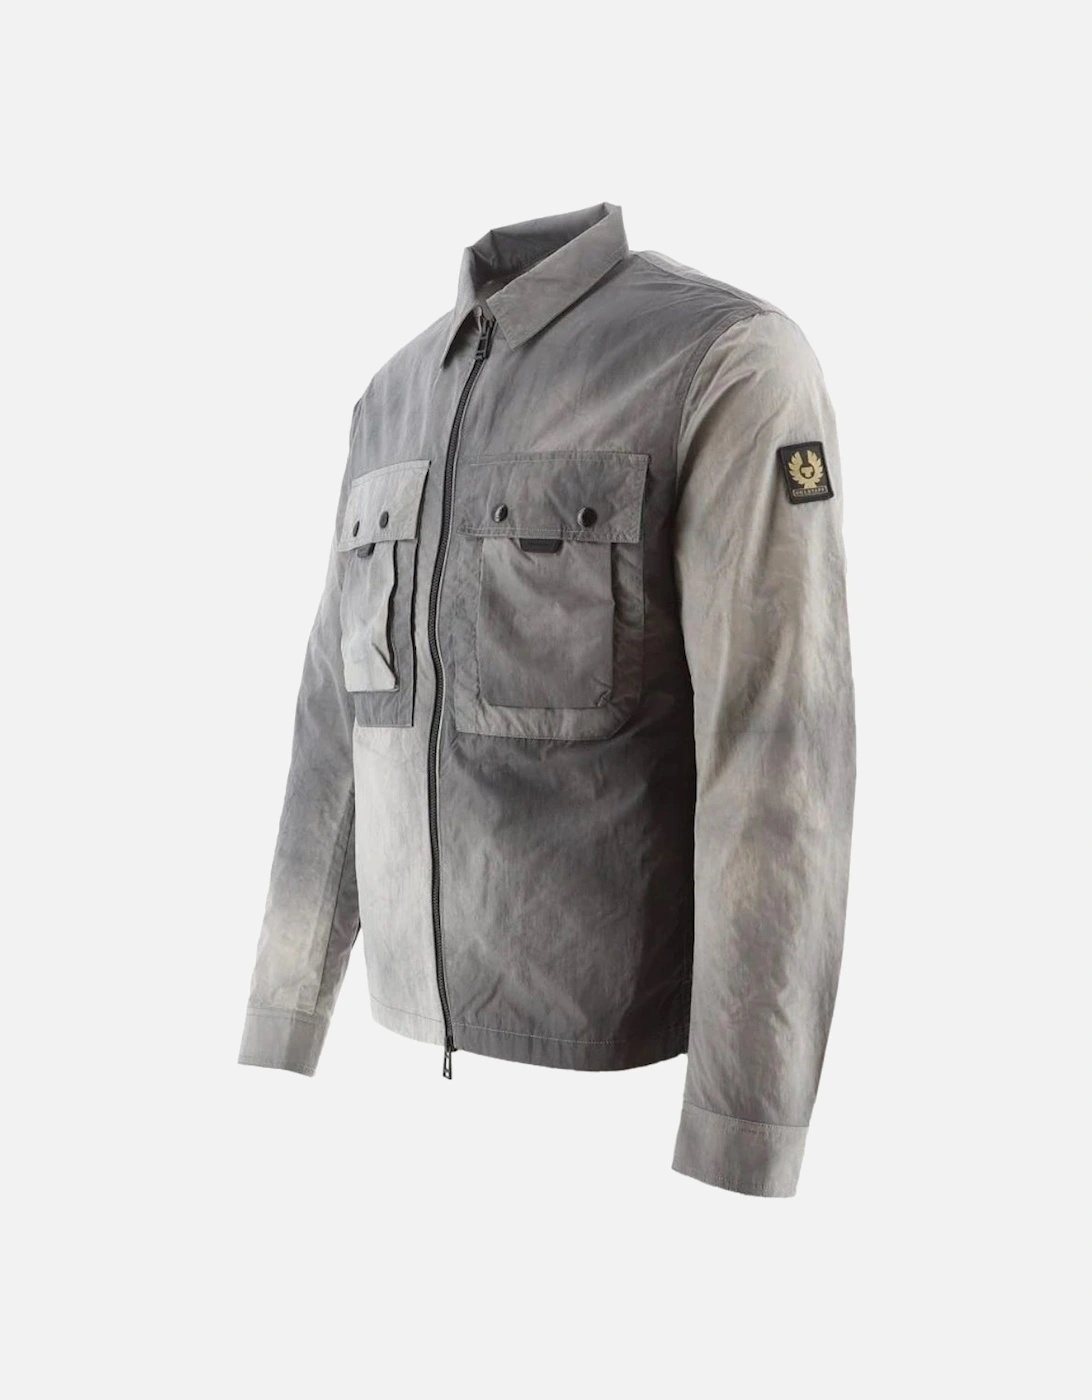 Tour Old Silver Overshirt Grey Jacket